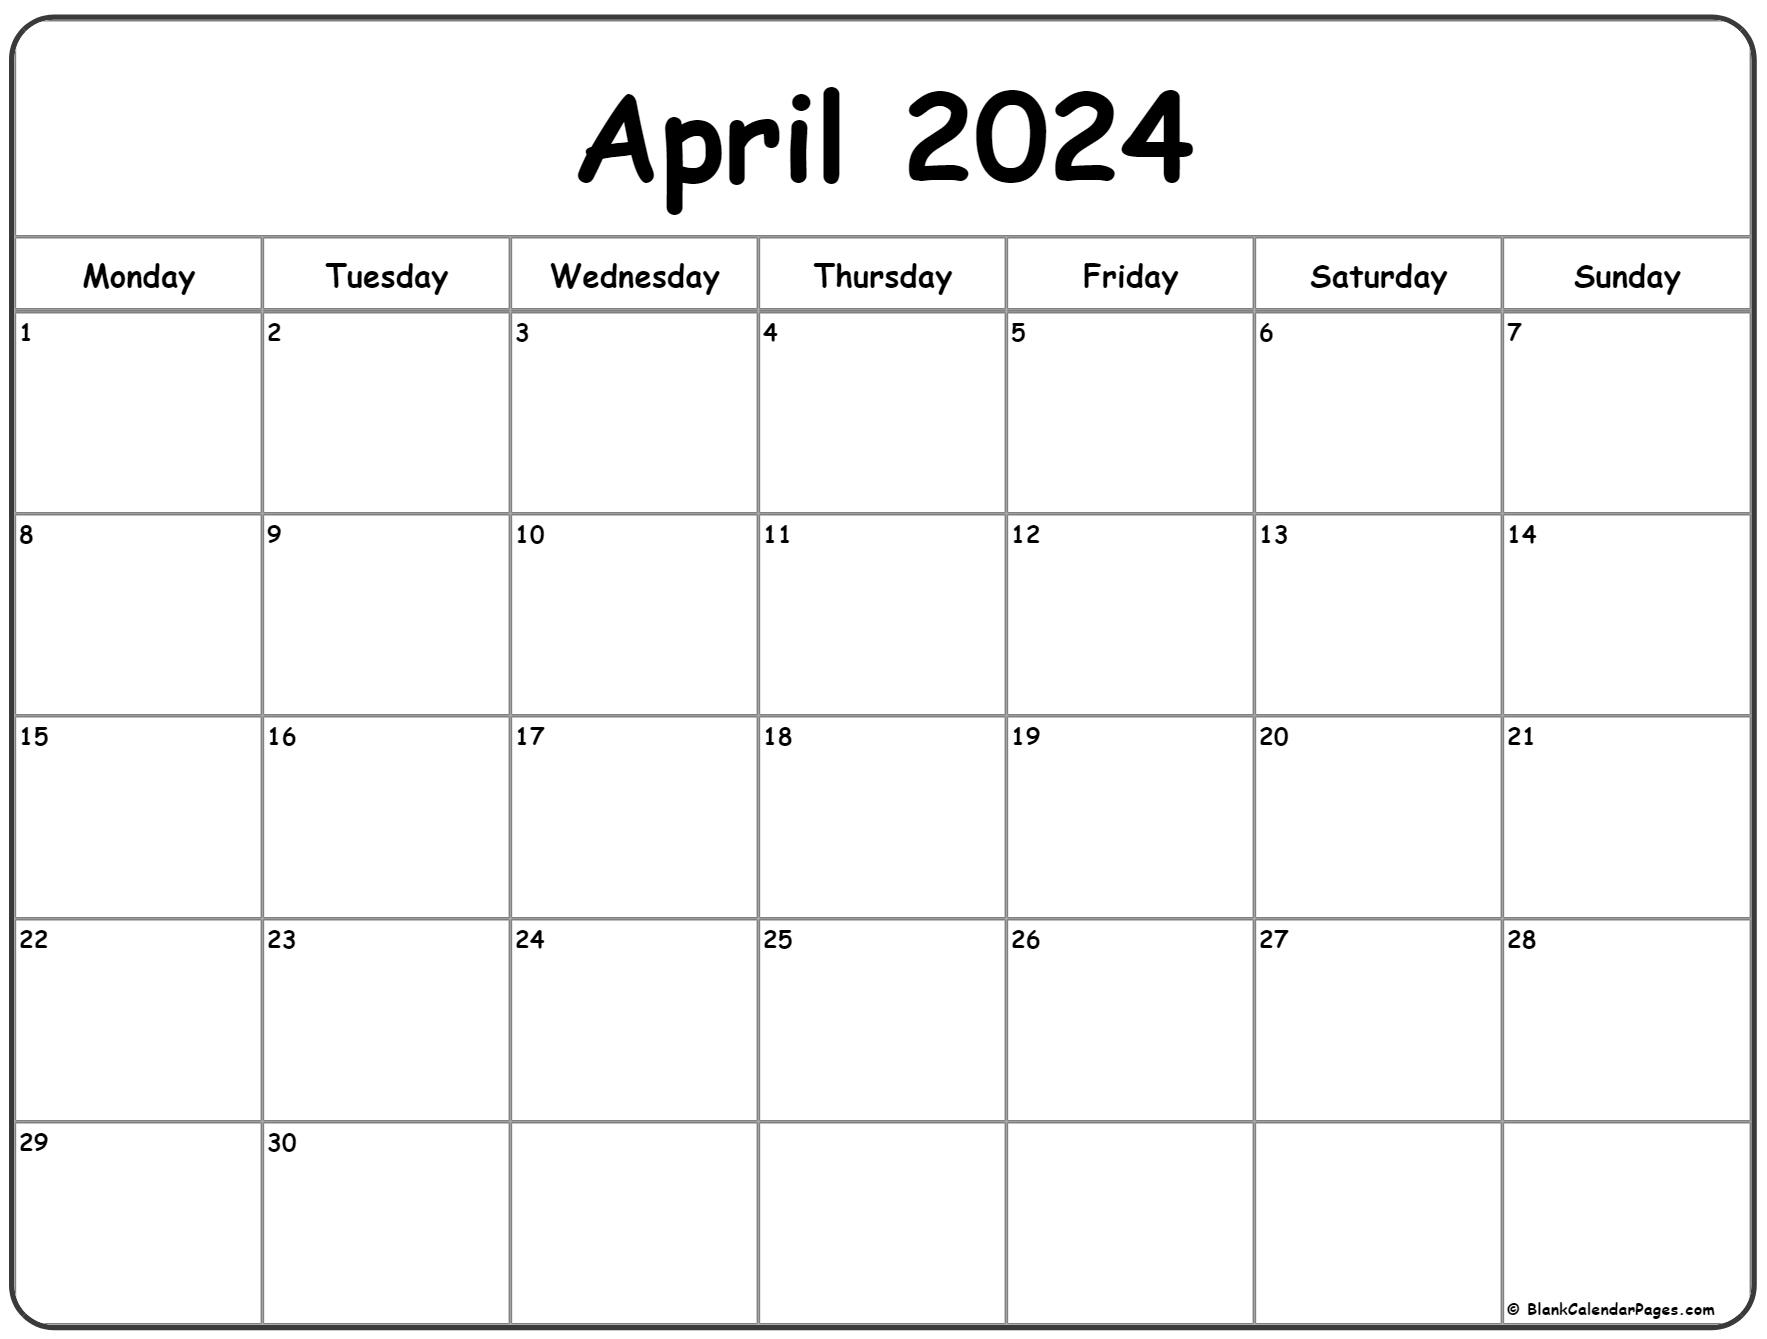 April 2024 Monday Calendar | Monday To Sunday for Printable Calendar 2024 Monday To Sunday